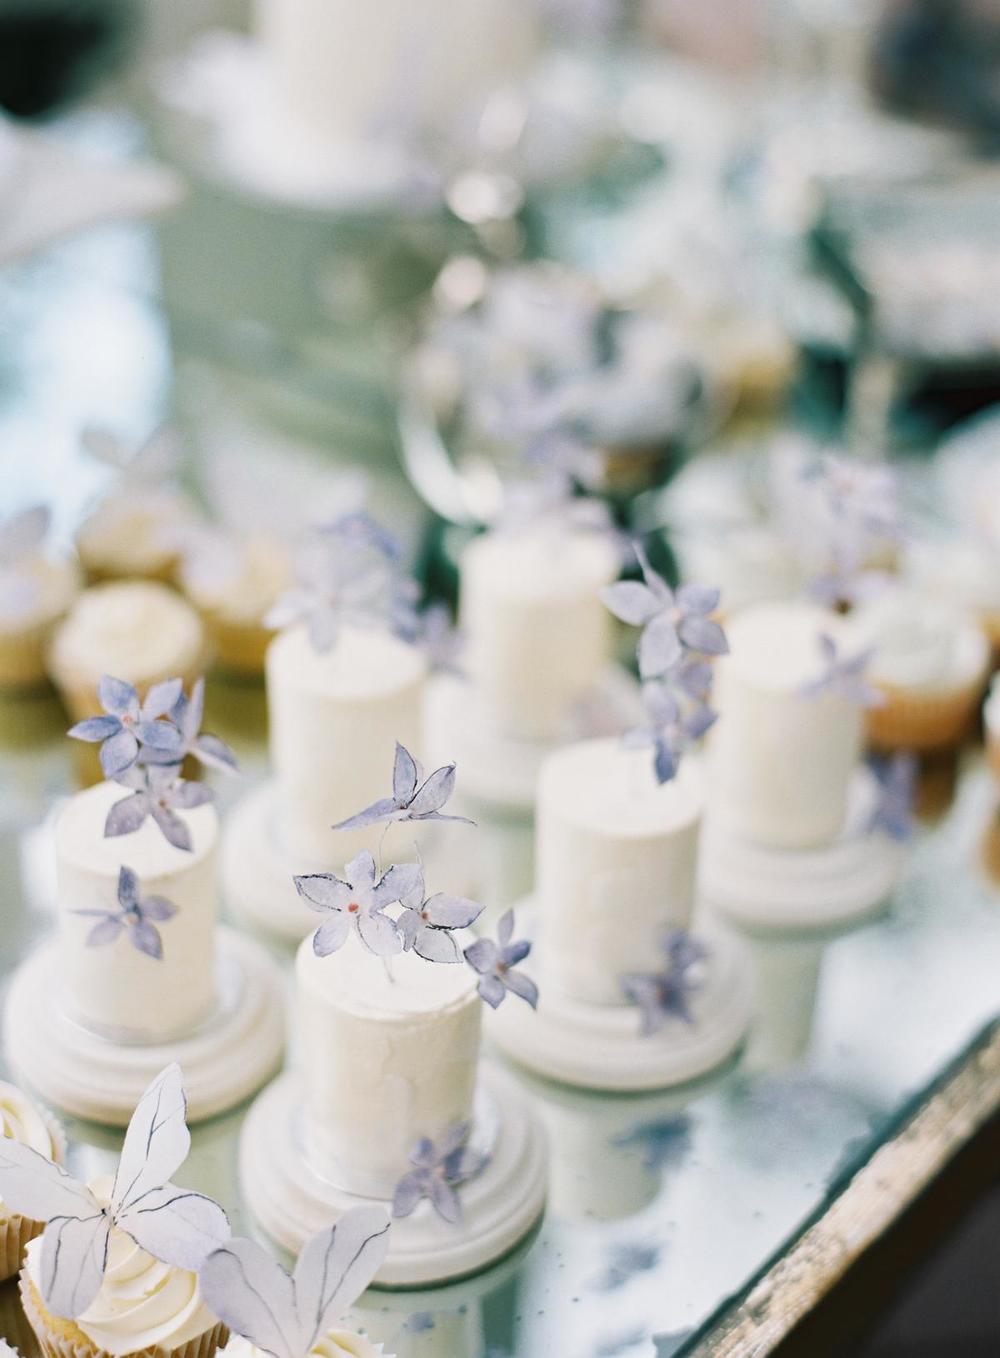 Custom Sugar Flower wedding cake toppers + floral arrangements